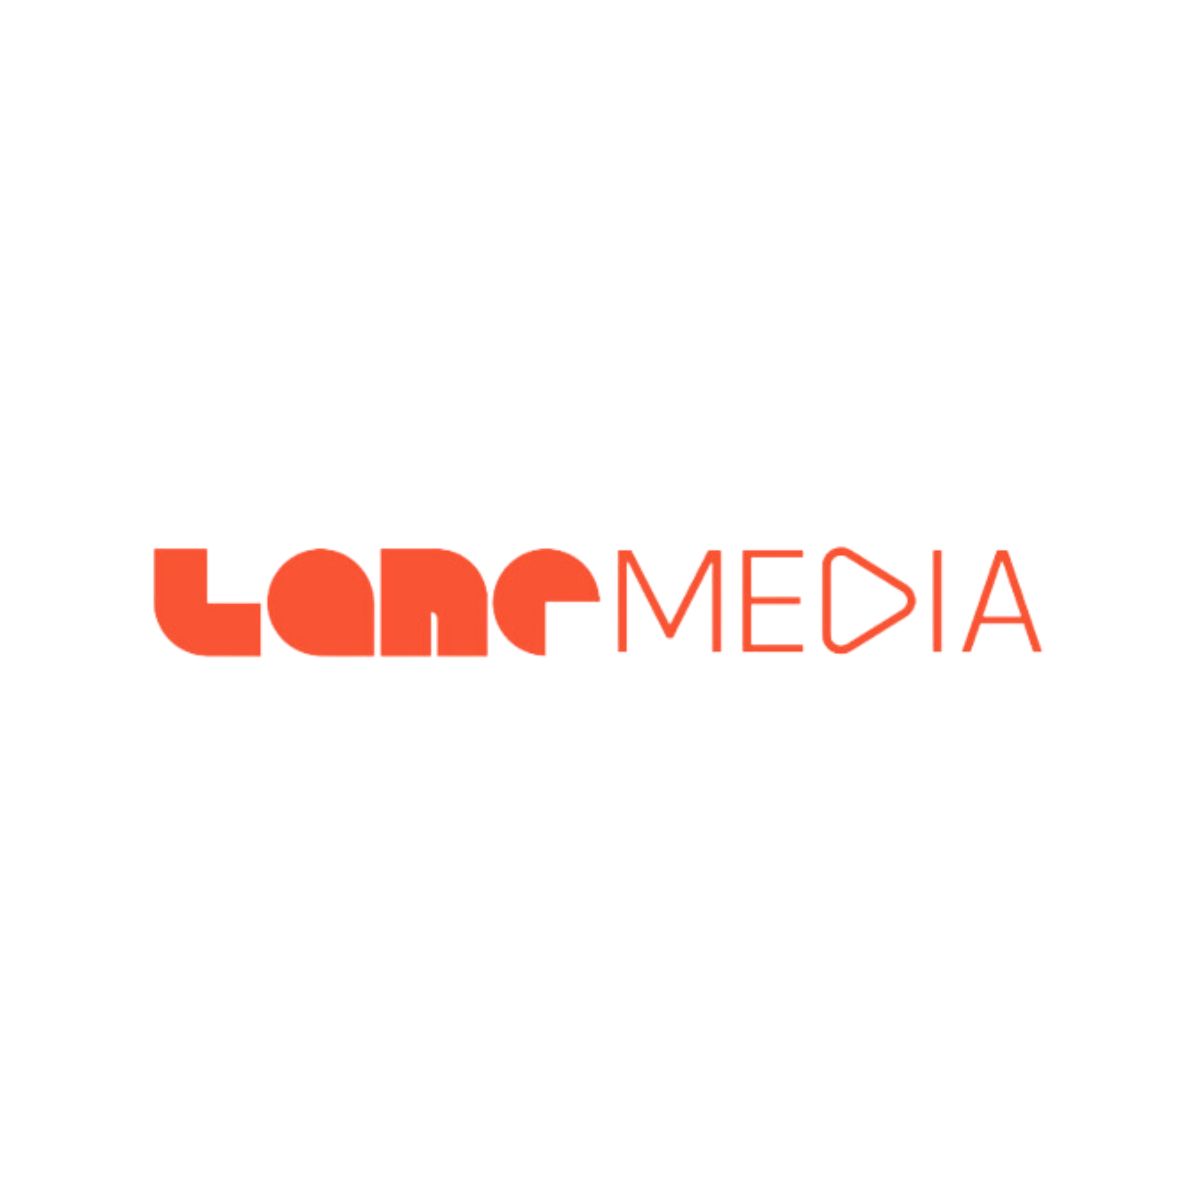 <Lane Media>